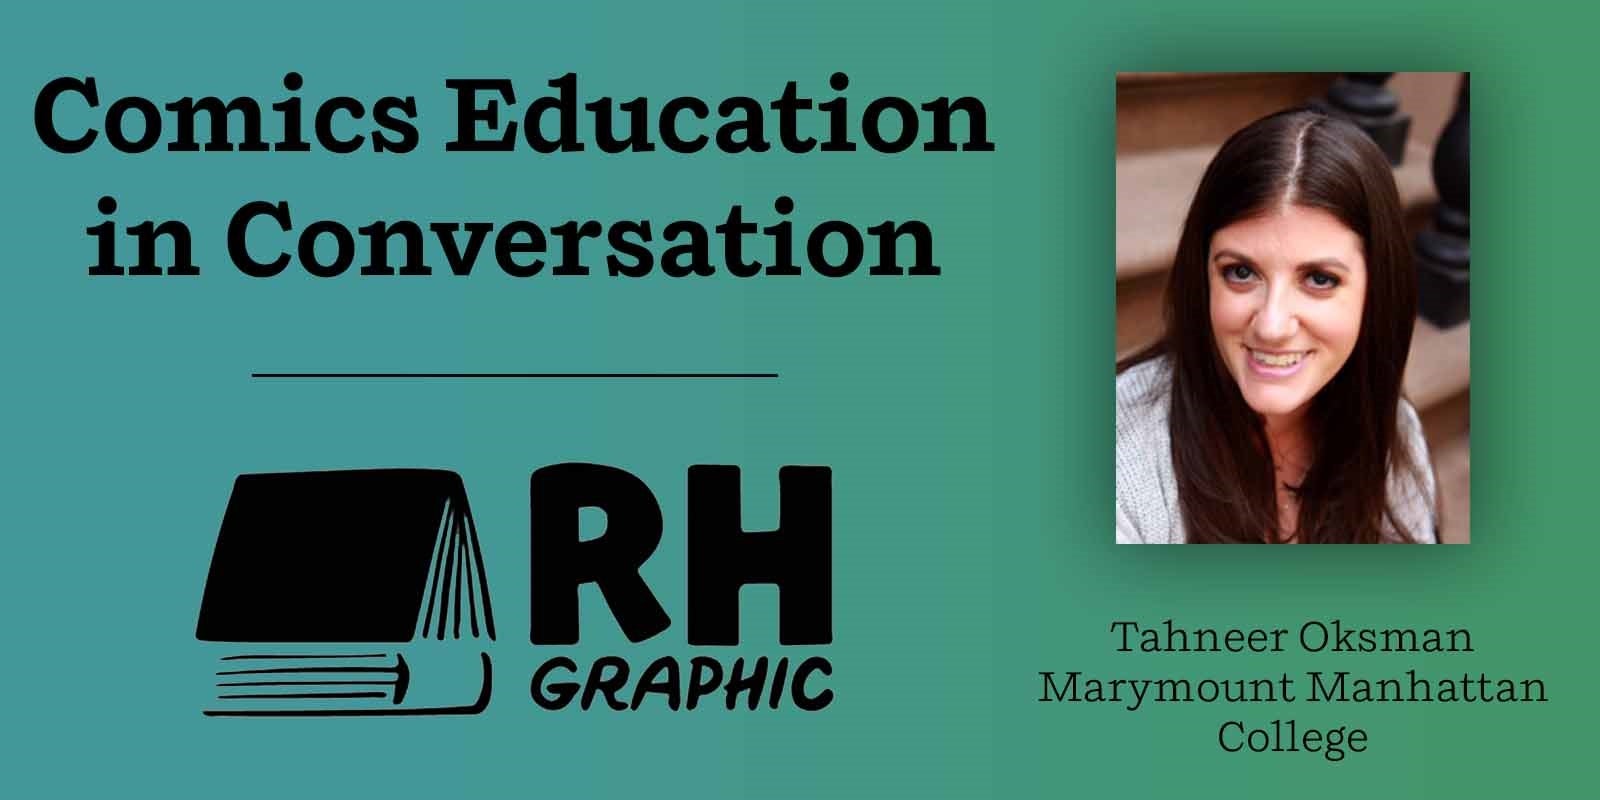 Comics Education in Conversation: Tahneer Oksman